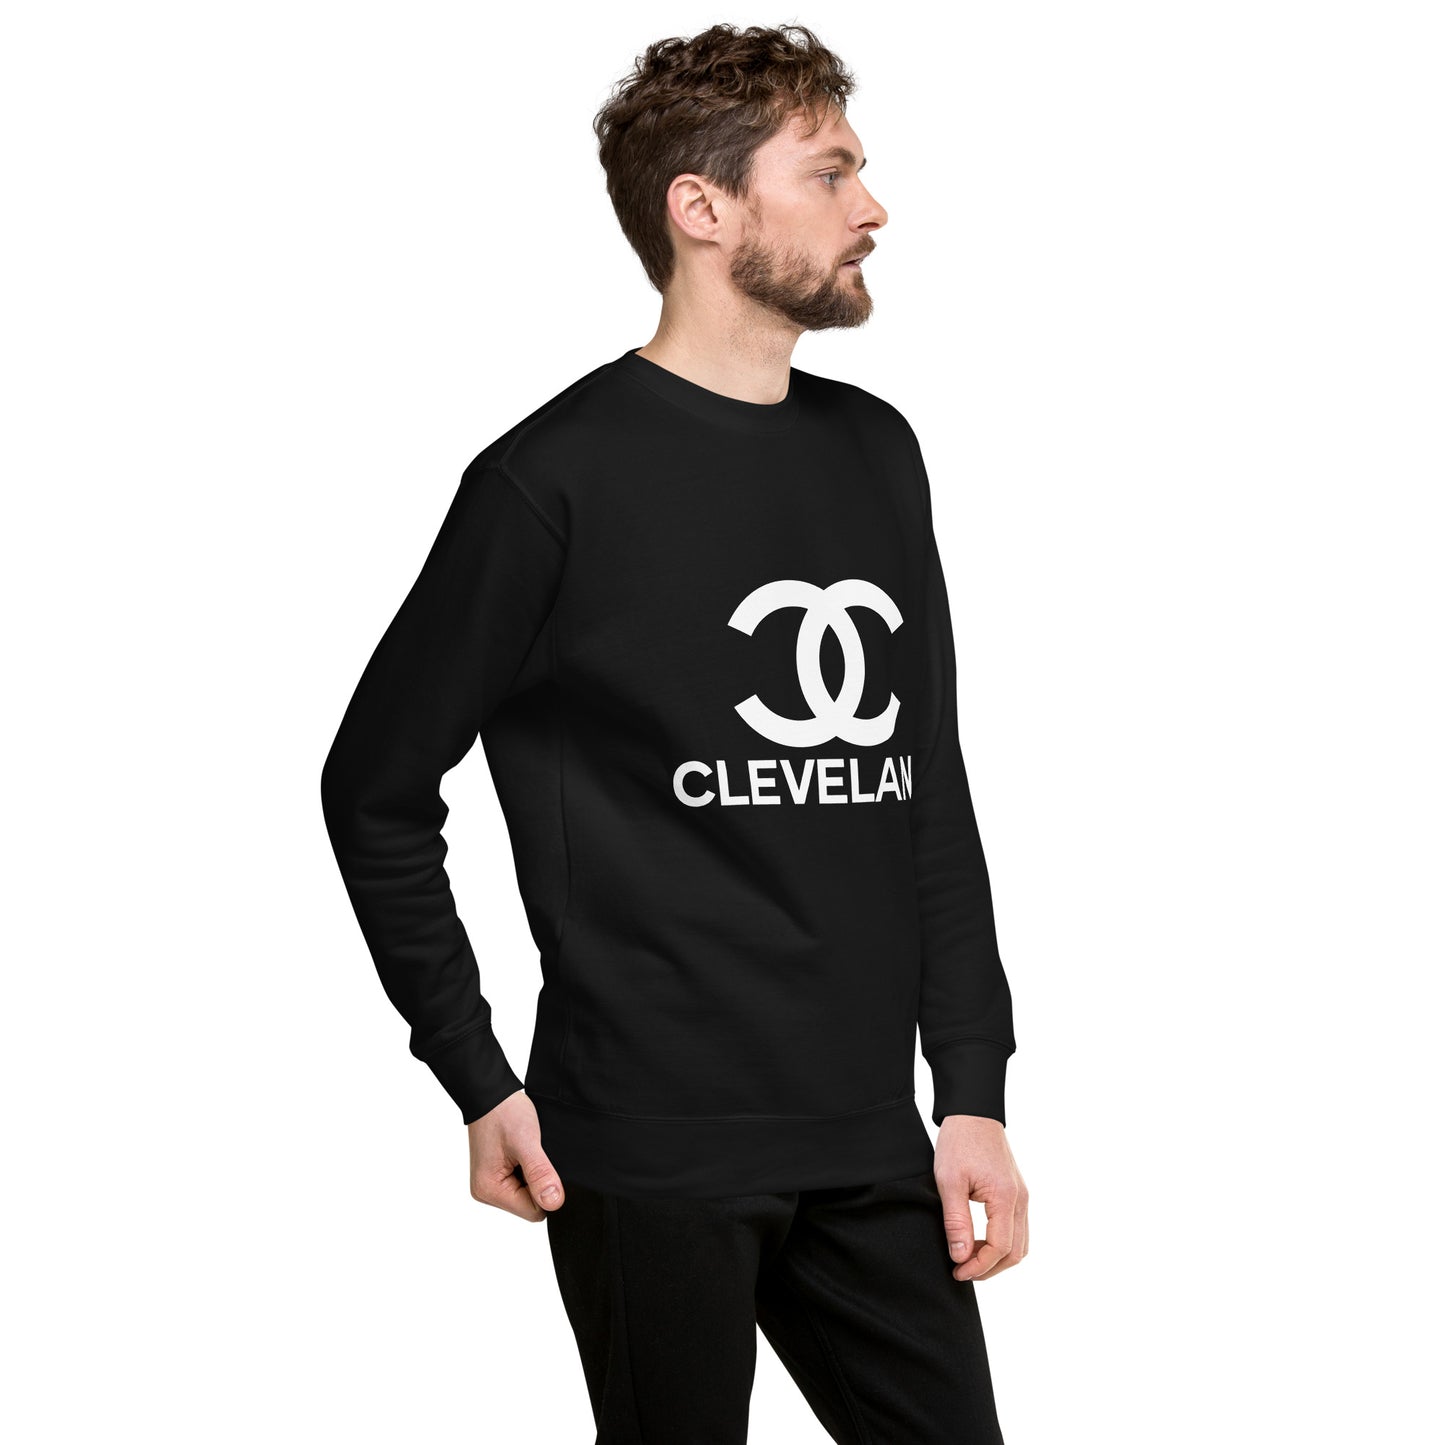 CC Cleveland Sweatshirt